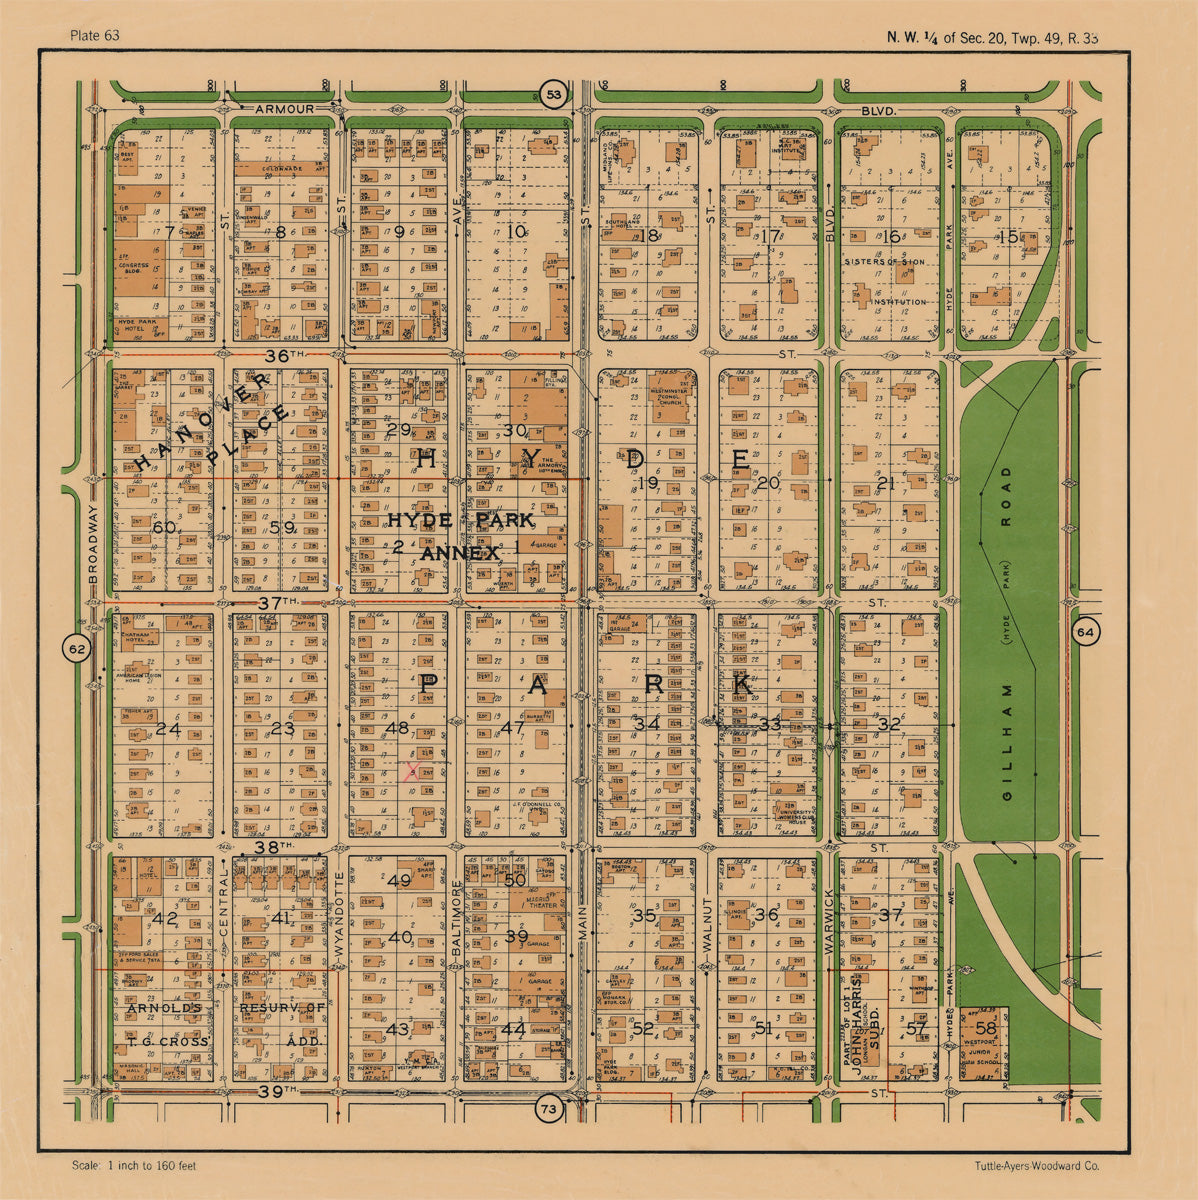 Kansas City 1925 Neighborhood Map - Plate #63 Armour-39th Broadway-Gillham Rd